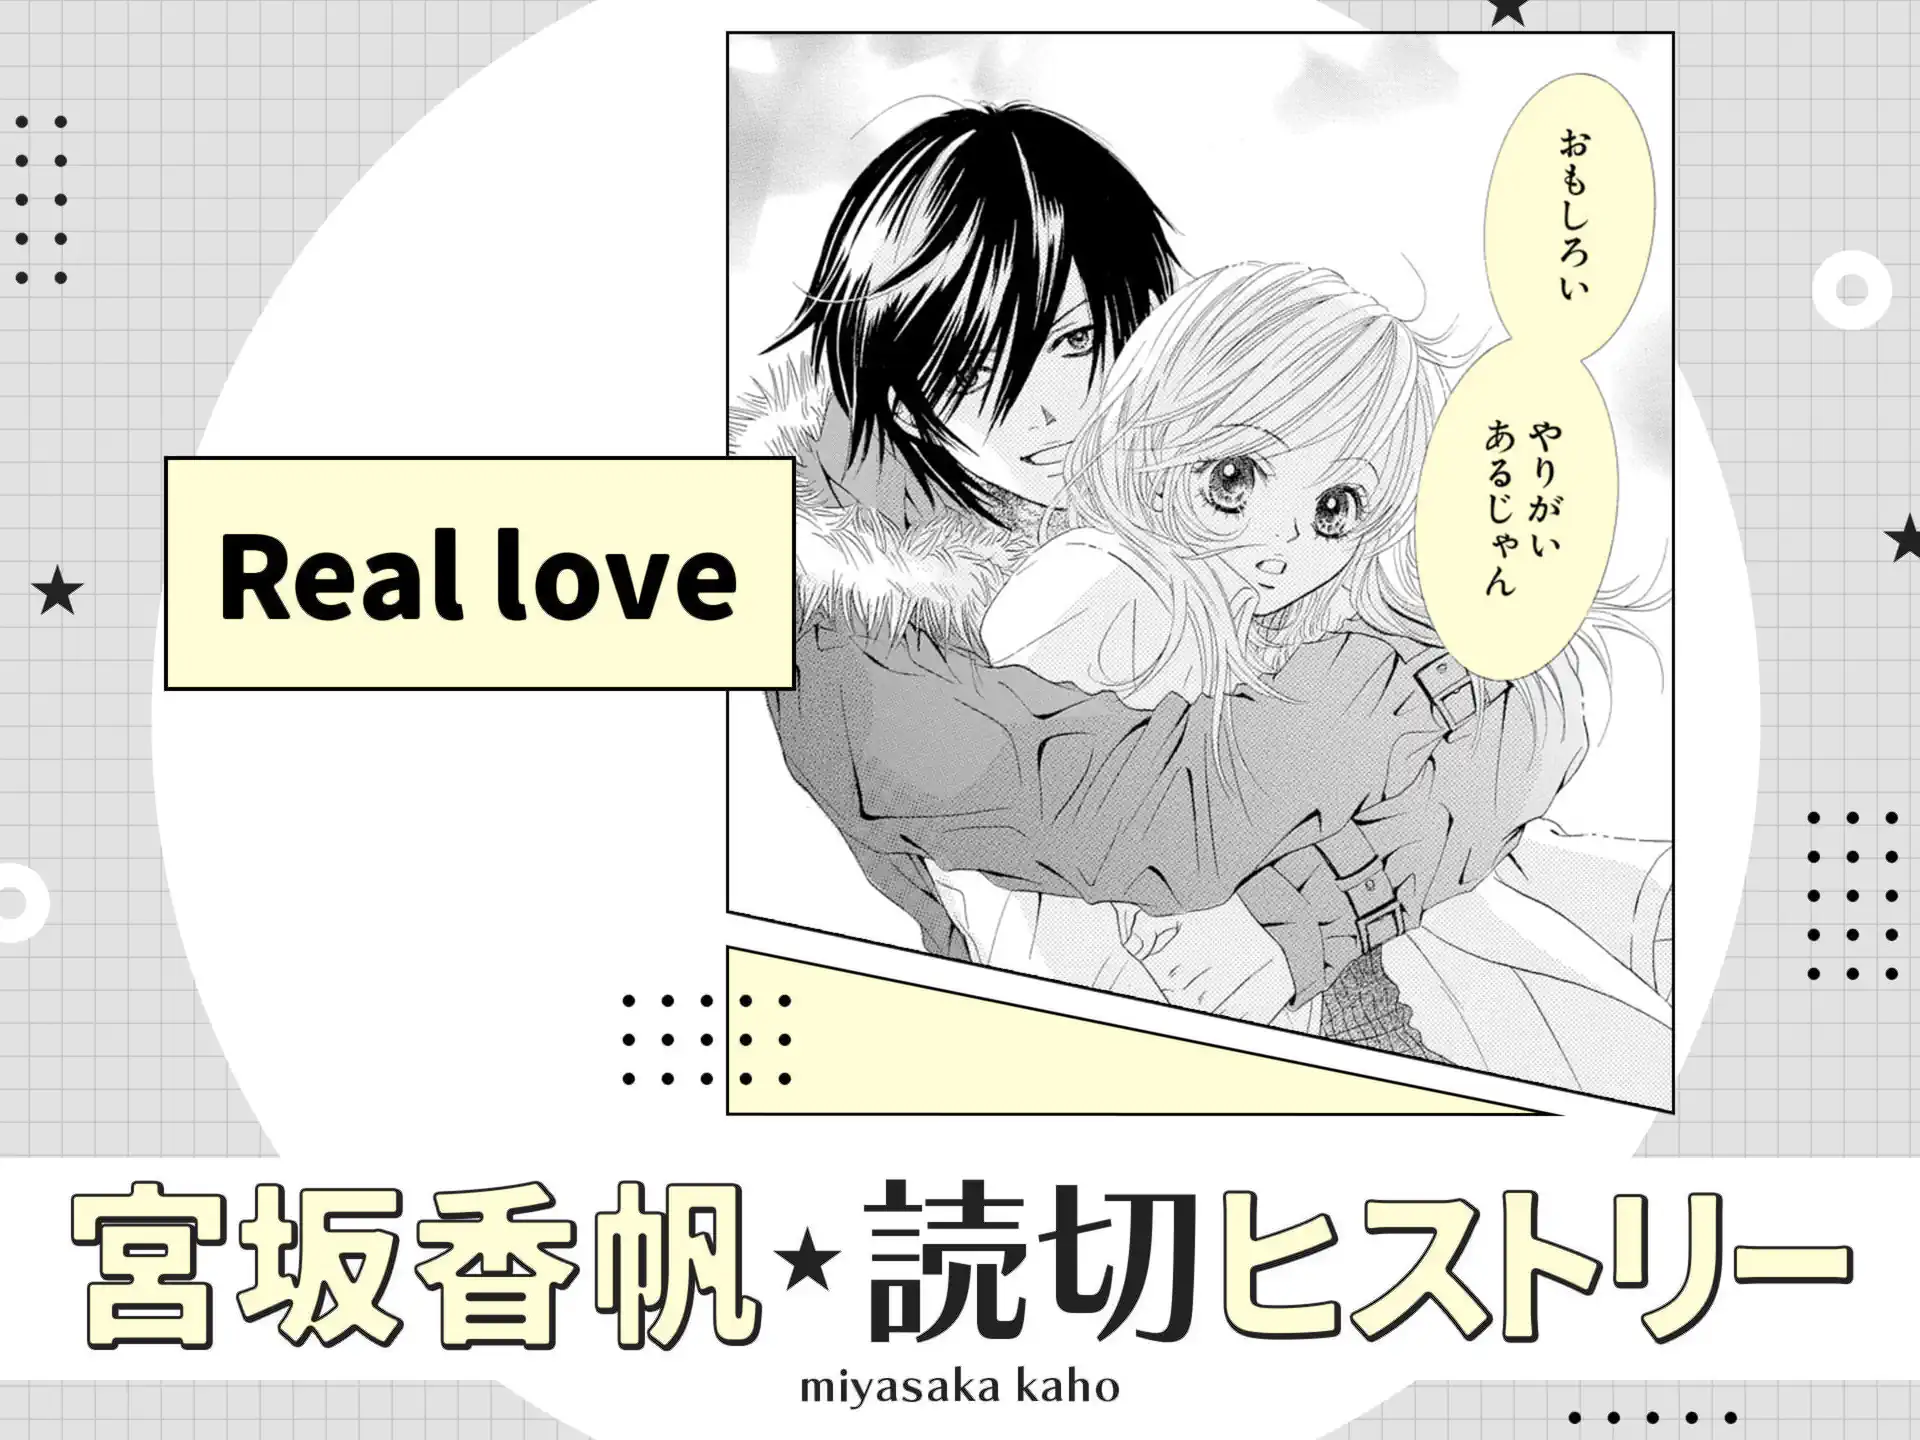 Real love〜Real Kiss2〜 の作品サムネイル